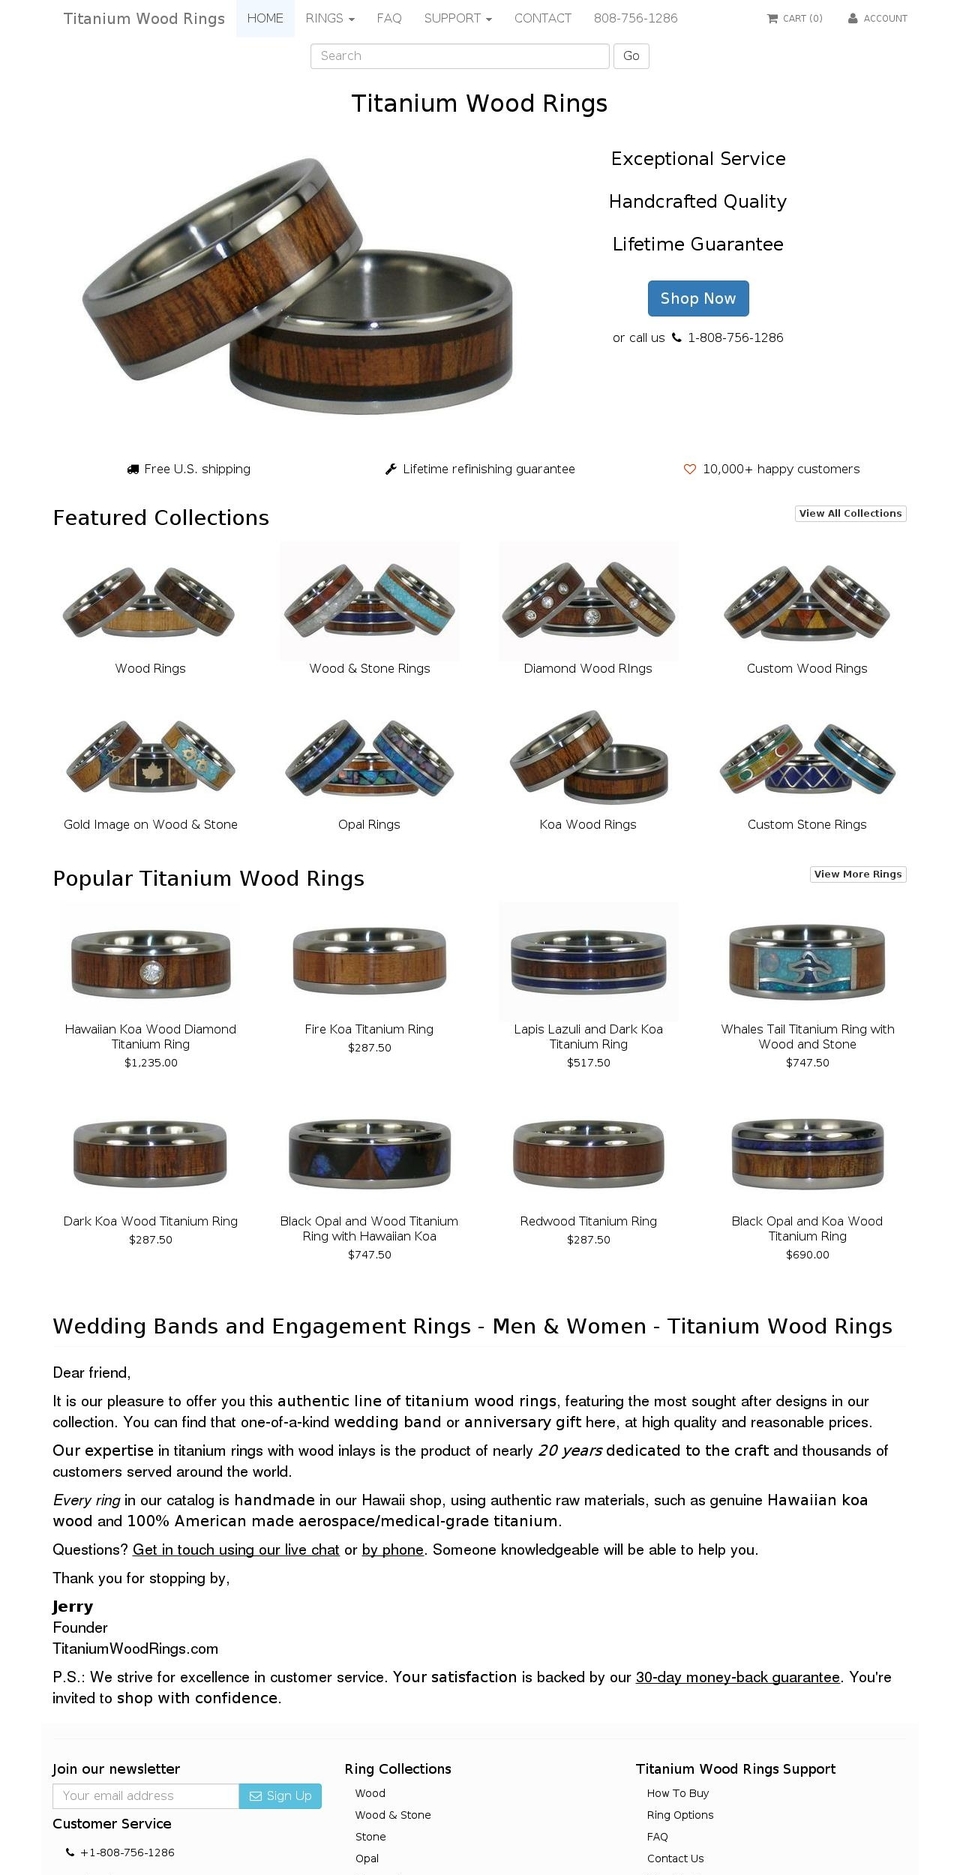 Titanium Wood Rings twr-310v1 Shopify theme site example koawoodring.org